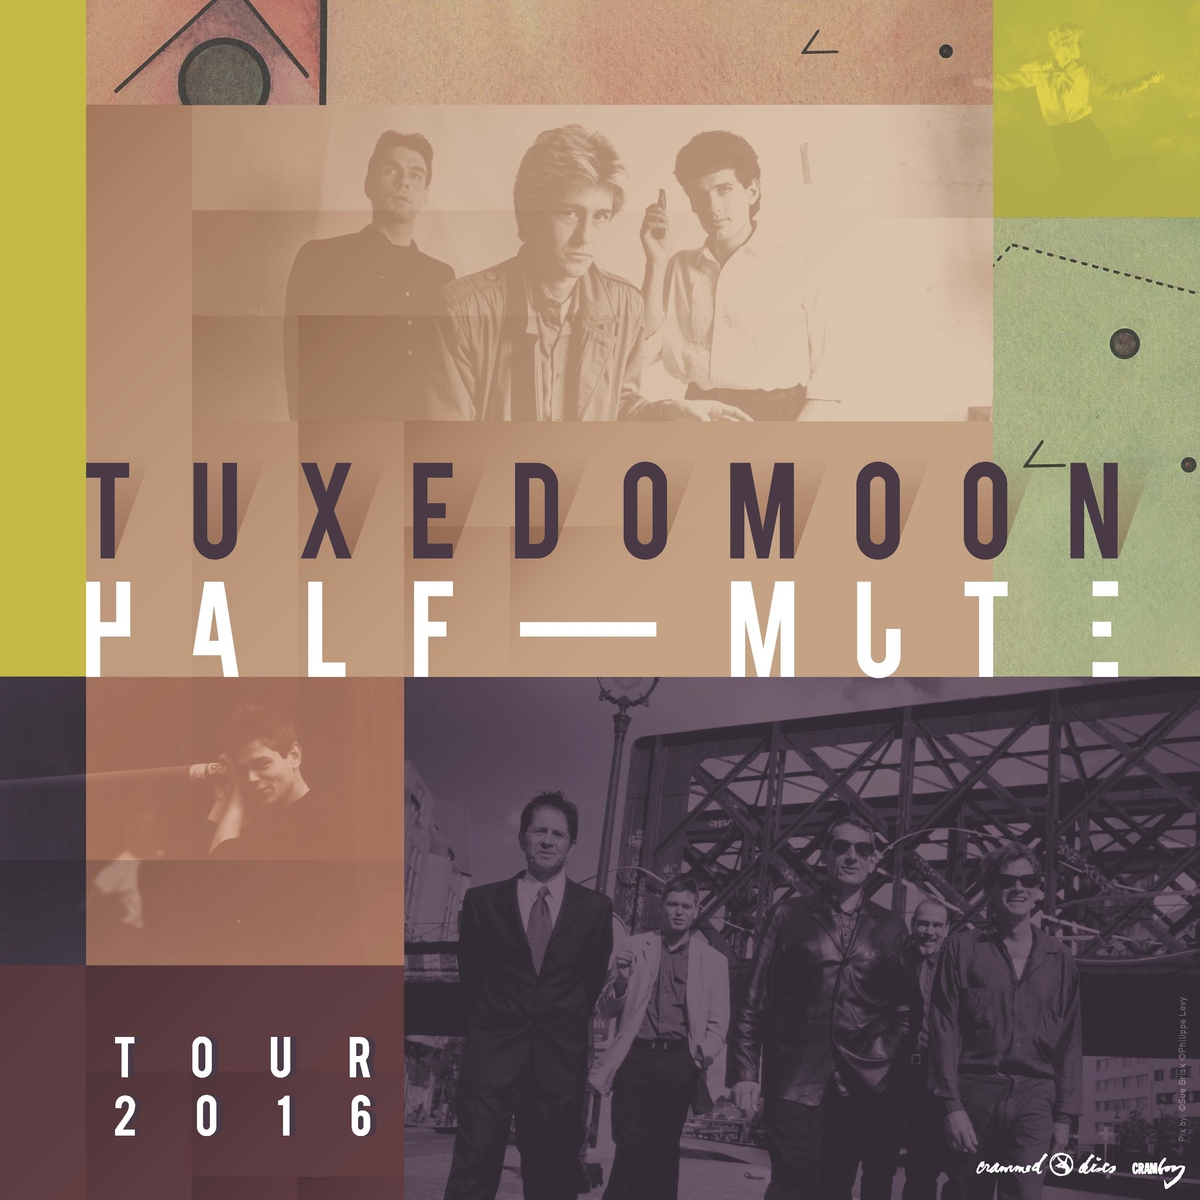 tuxedomooon-half-mute_image_fb